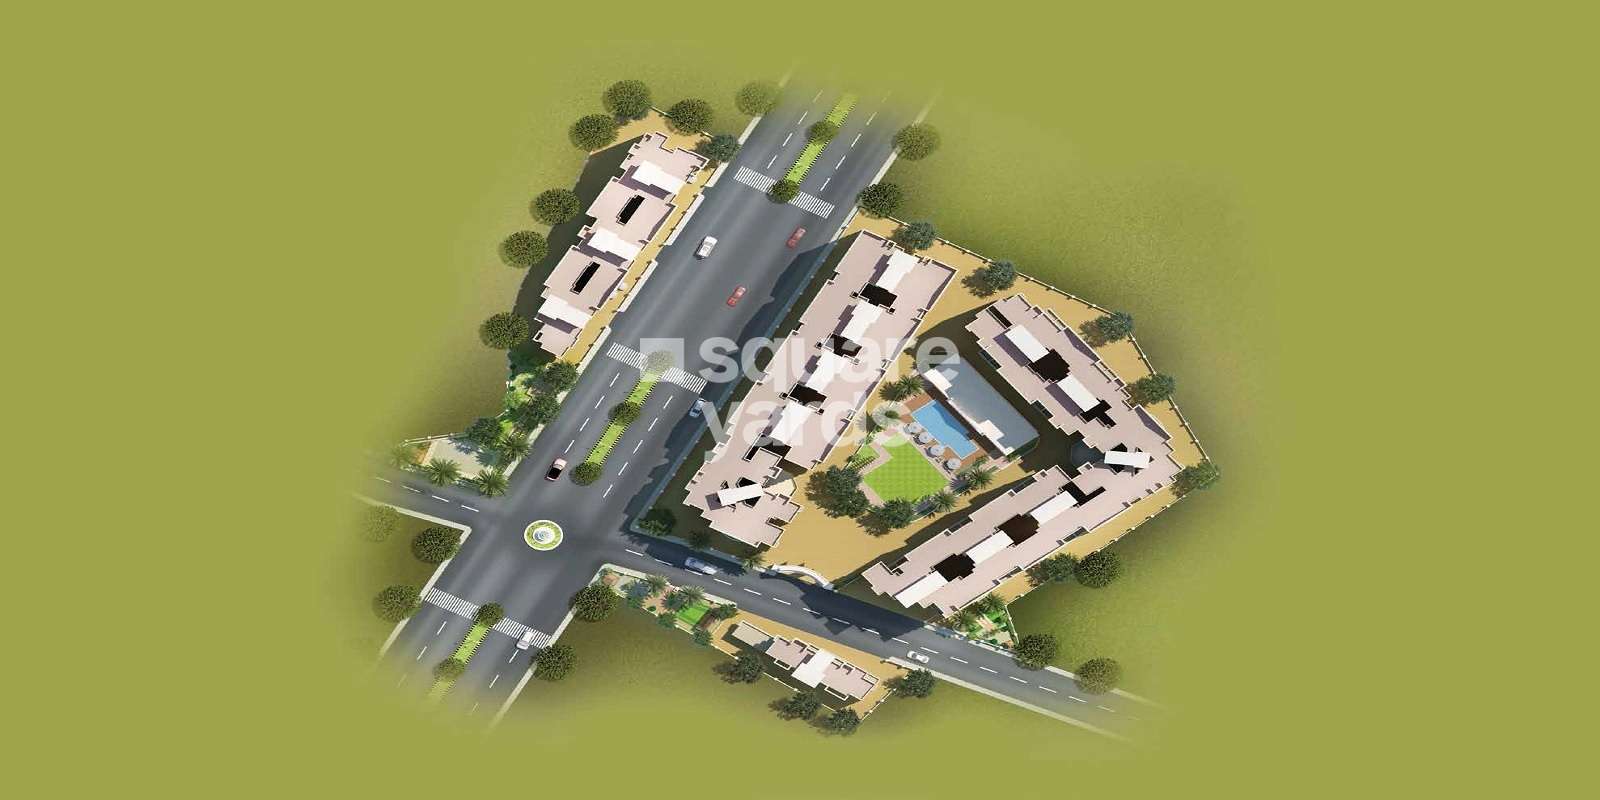 konark gardens project master plan image1